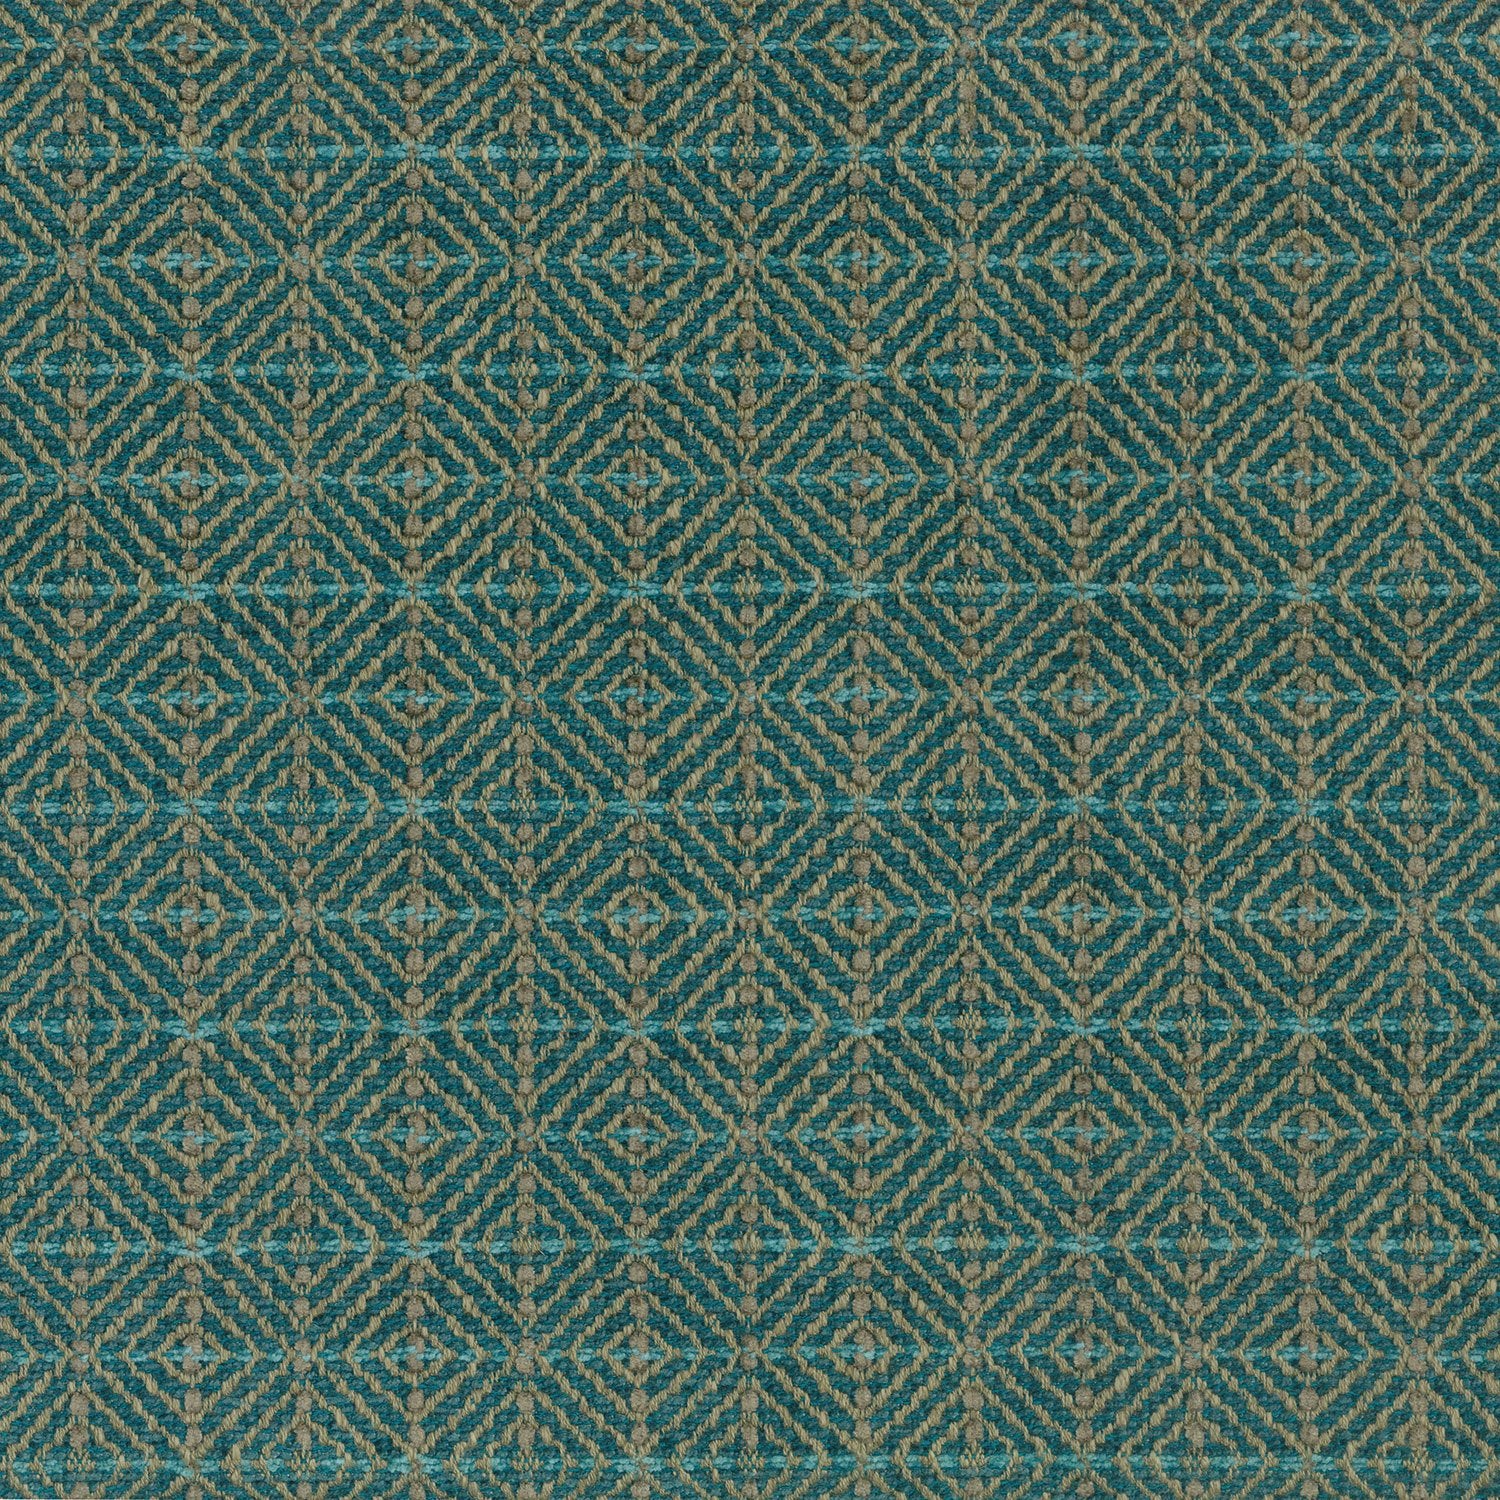 Nina Campbell Fabric - Umbria Todi Teal/Turquoise/Beige NCF4262-02